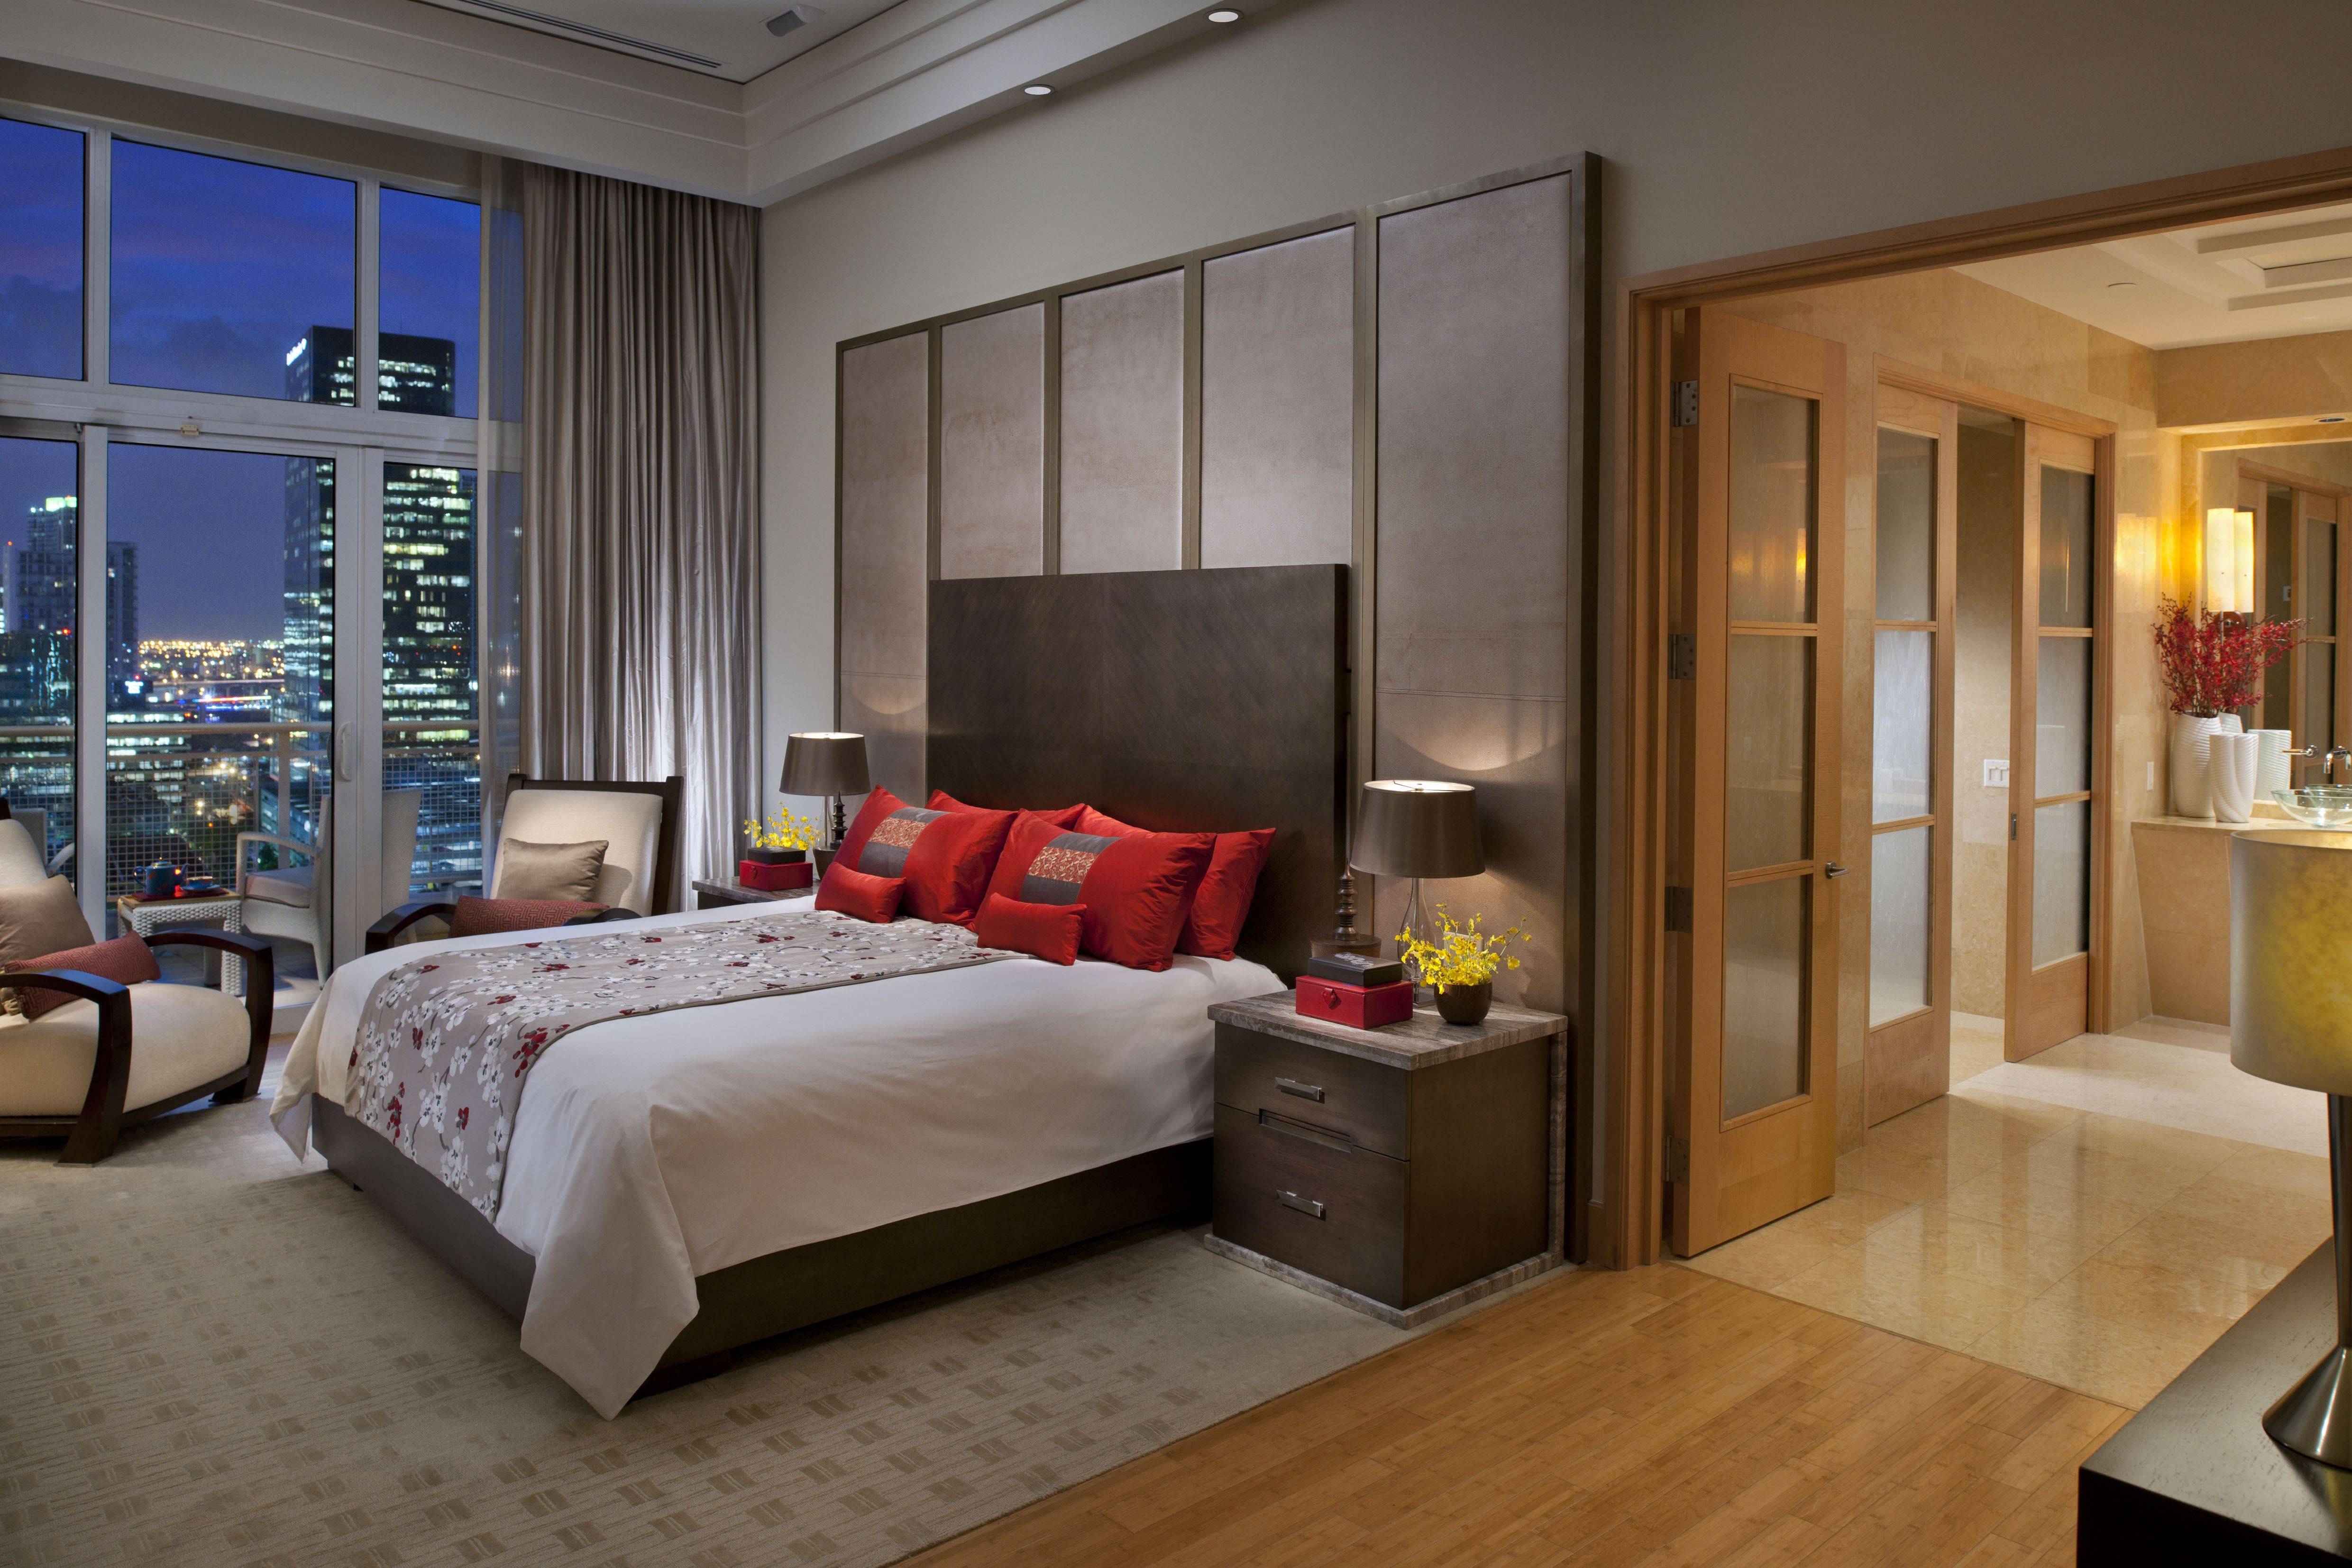 Видео красивых квартир. Отель Mandarin oriental Miami. Красивая квартира спальня. Красивая комната. Спа комнаты.